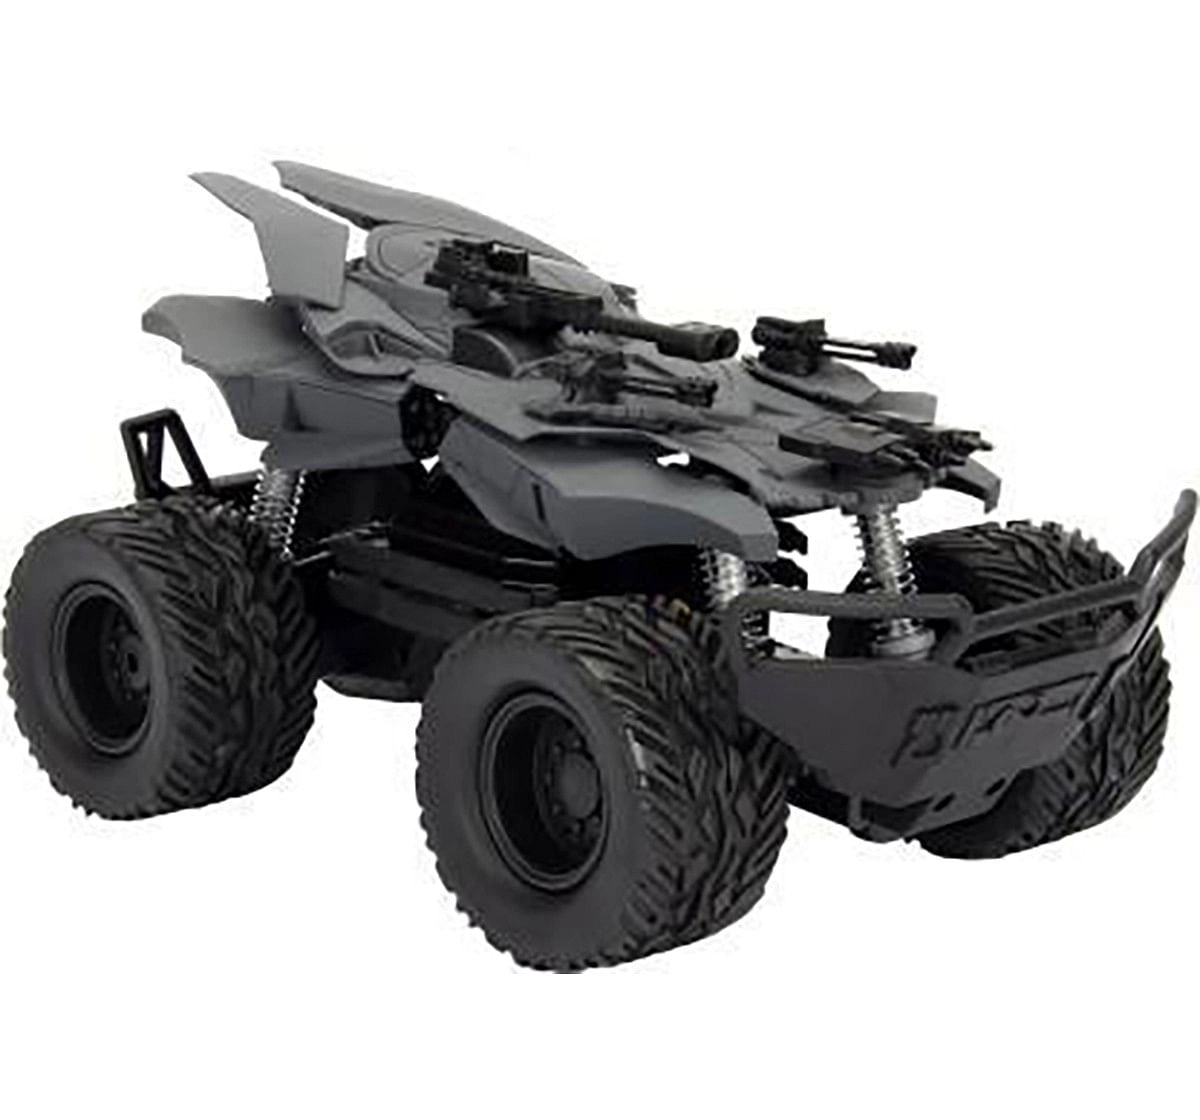 Dc Batman Justice League Remote Controlled Car - 1:12 Batmobile Remote Control Toys for age 8Y+ (Grey)